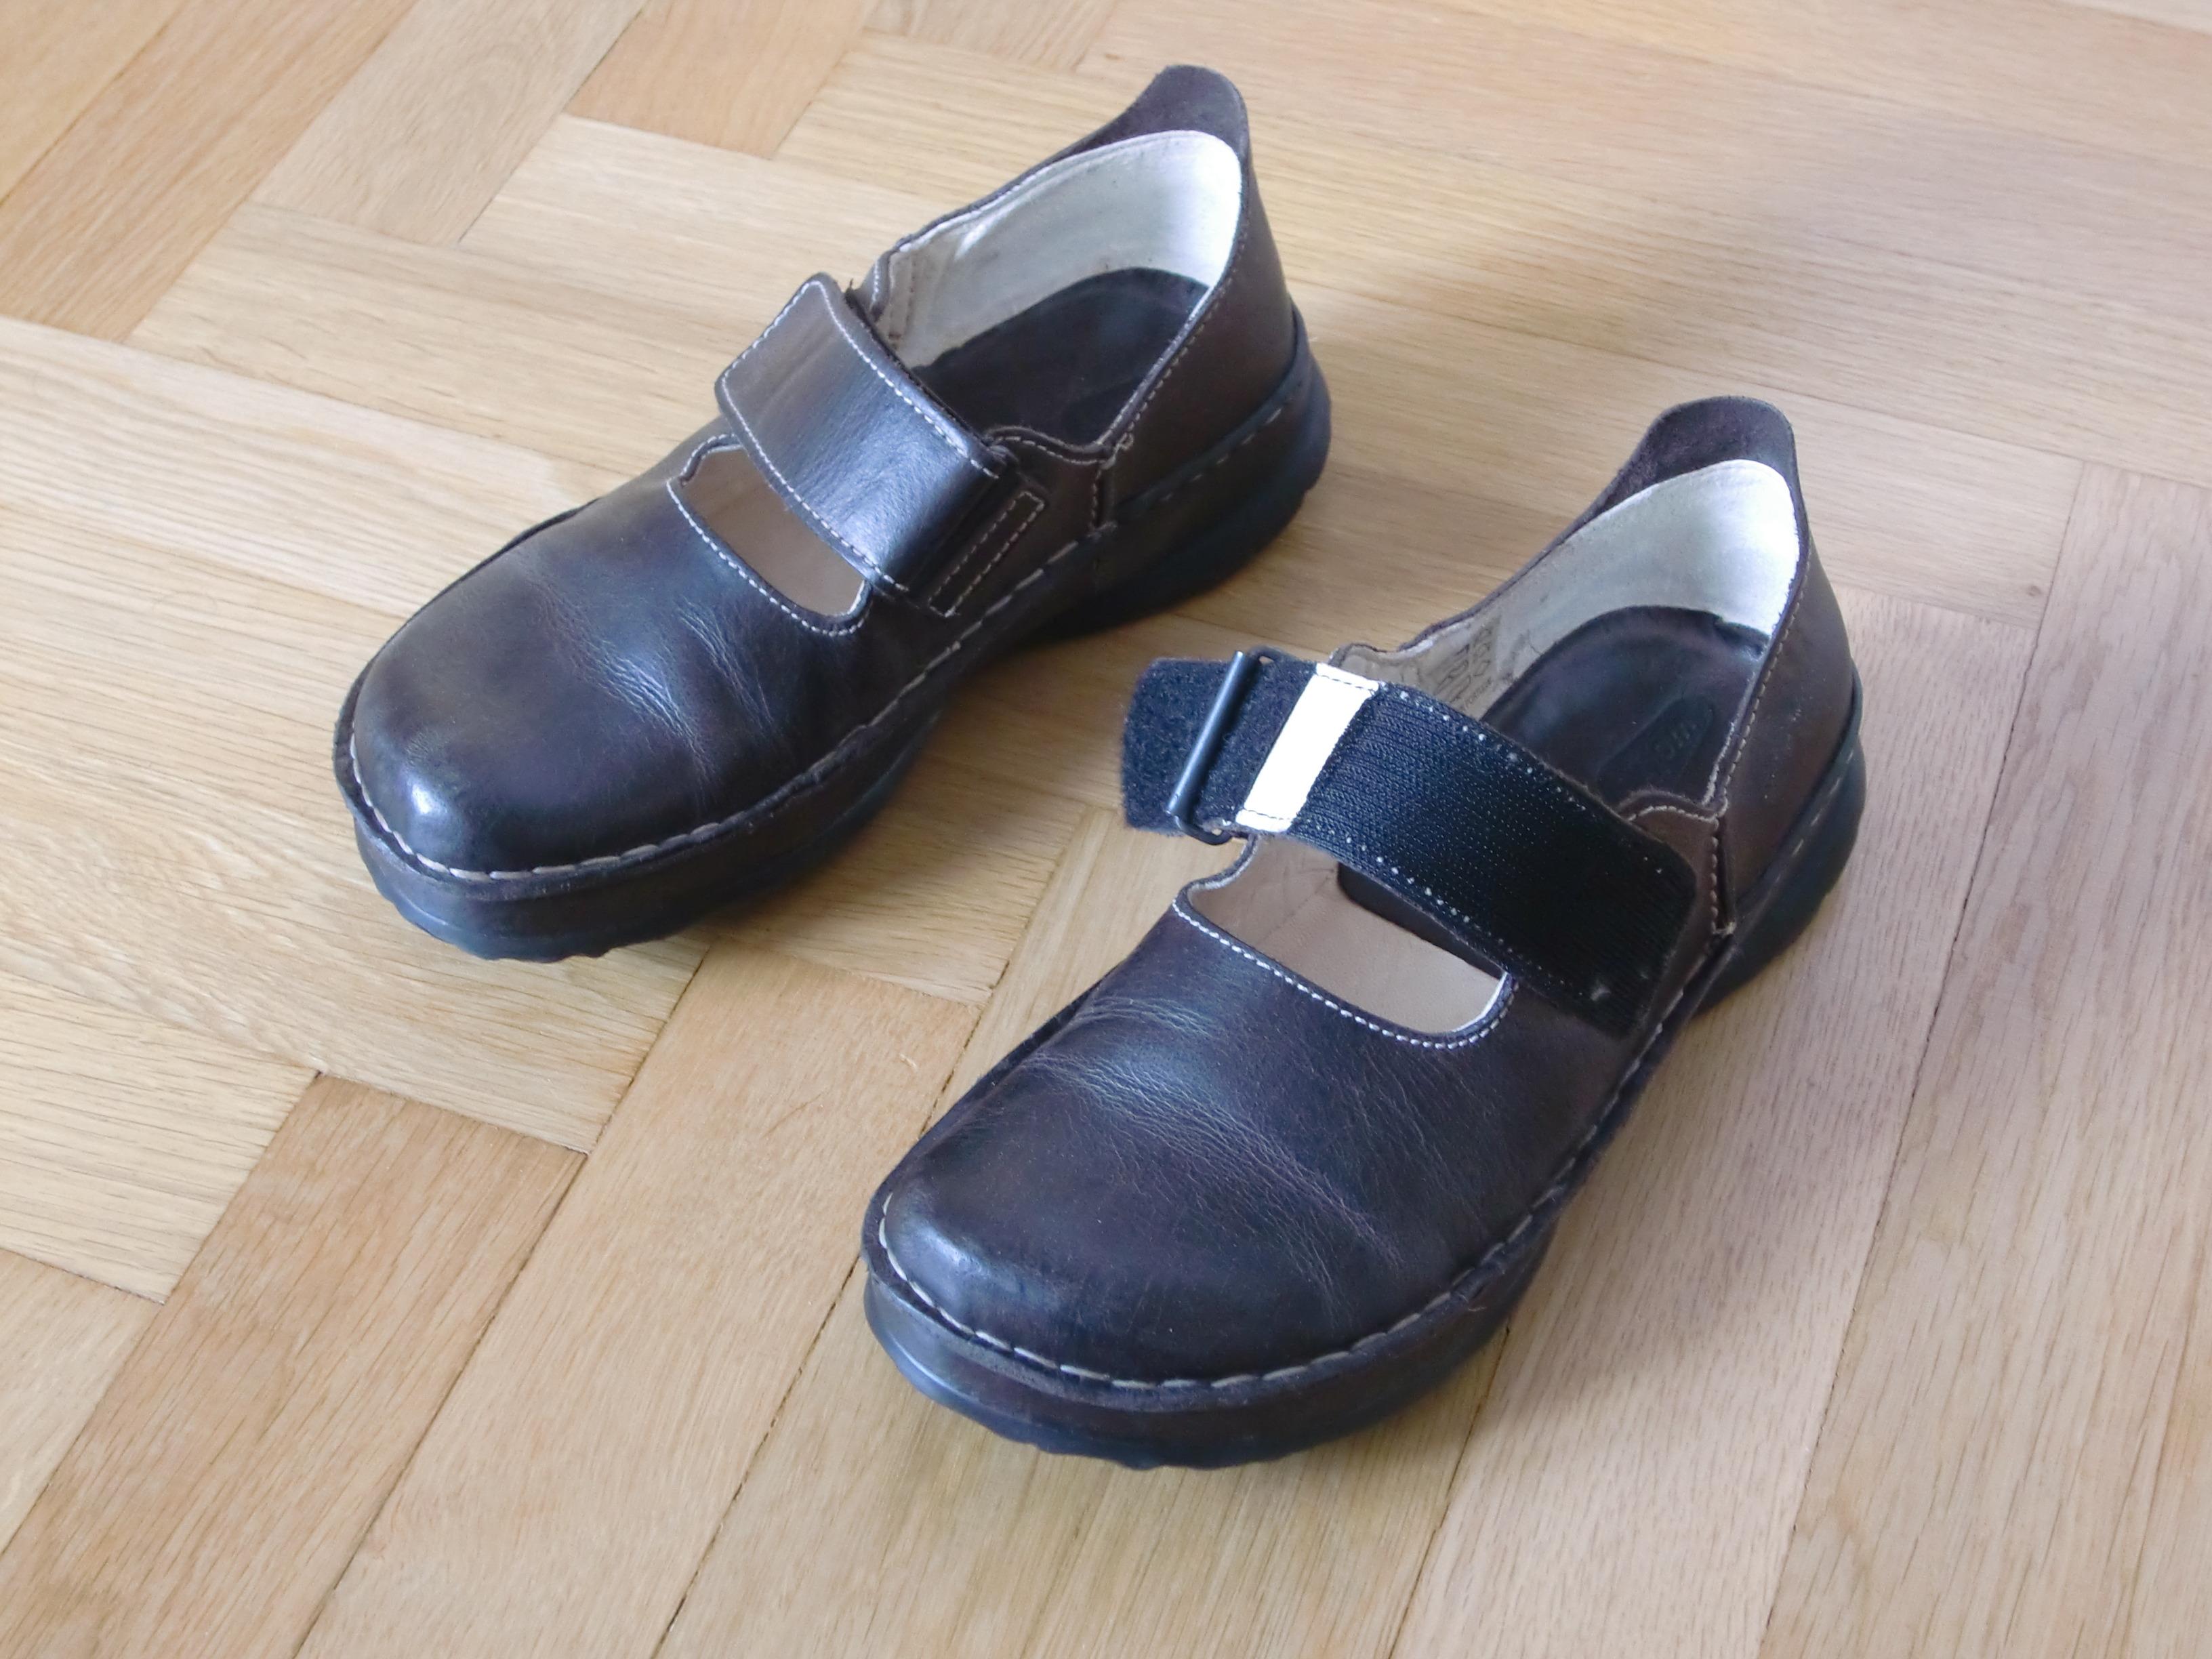 Wolky-Schuhe, Modell Erina